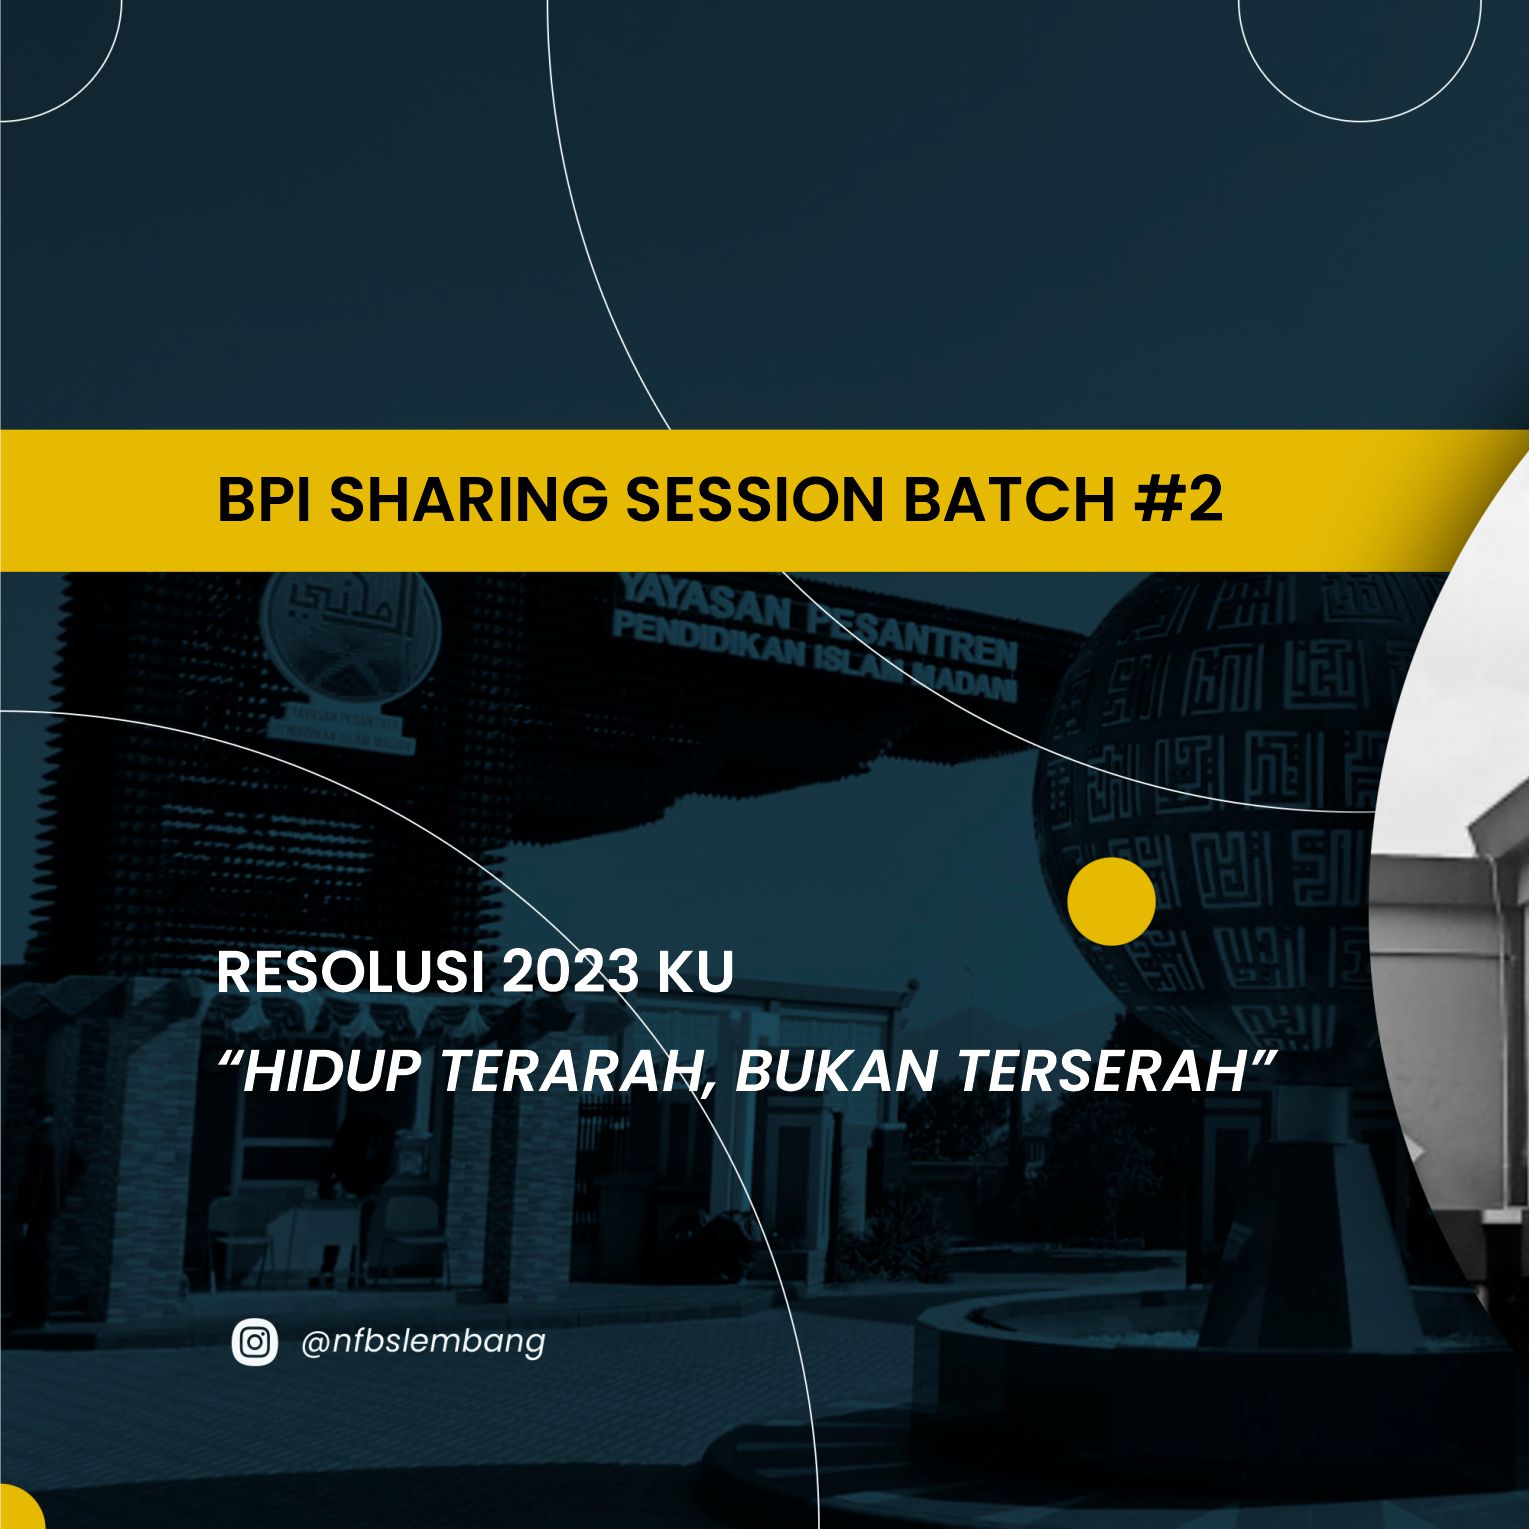 BPI SHARING SESSION BATCH #2, RESOLUSI 2023 KU “HIDUP TERARAH, BUKAN TERSERAH”